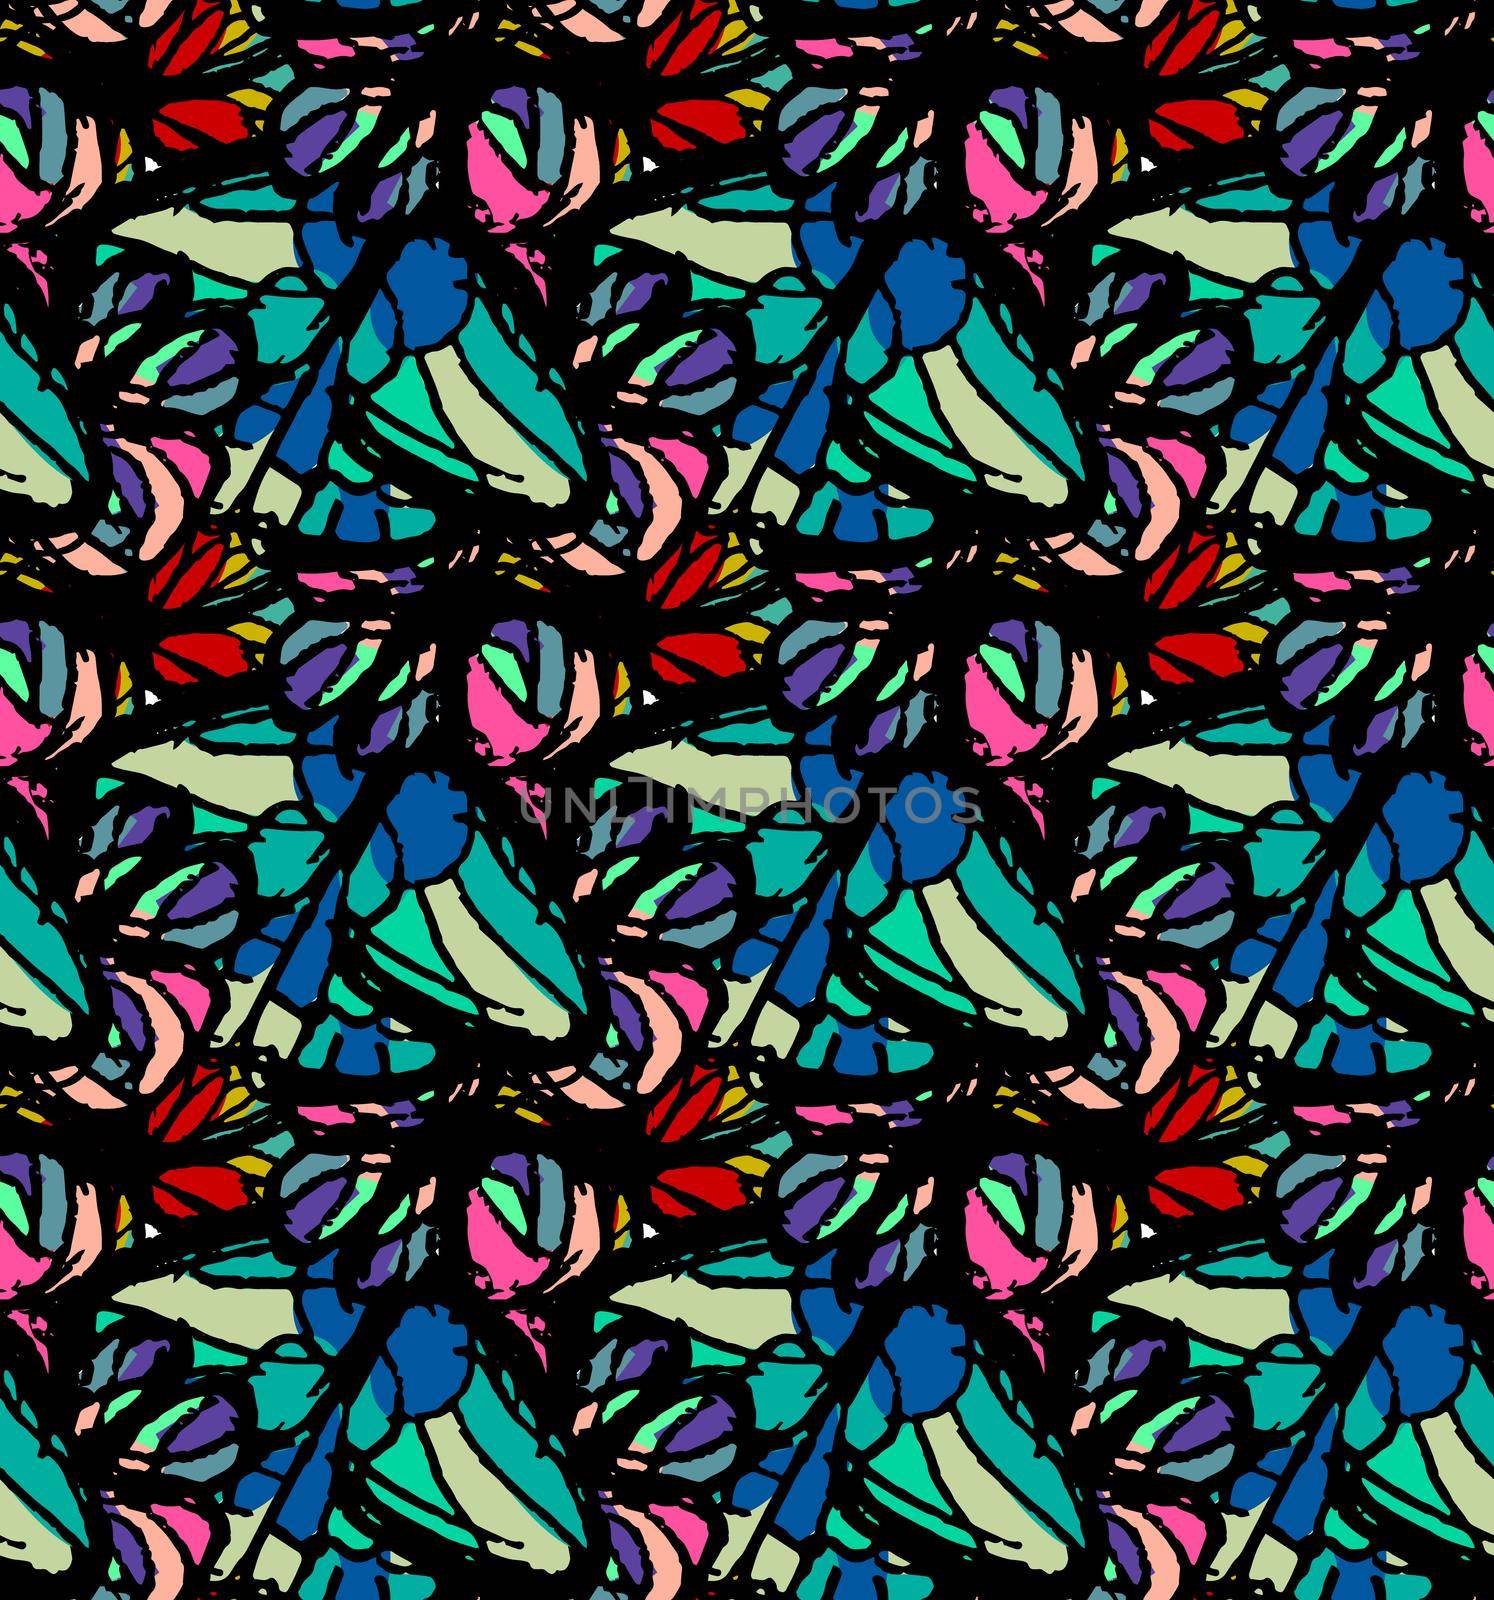 Monarch butterfly pattern wings. Flight of bright blue butterflies abstract background.